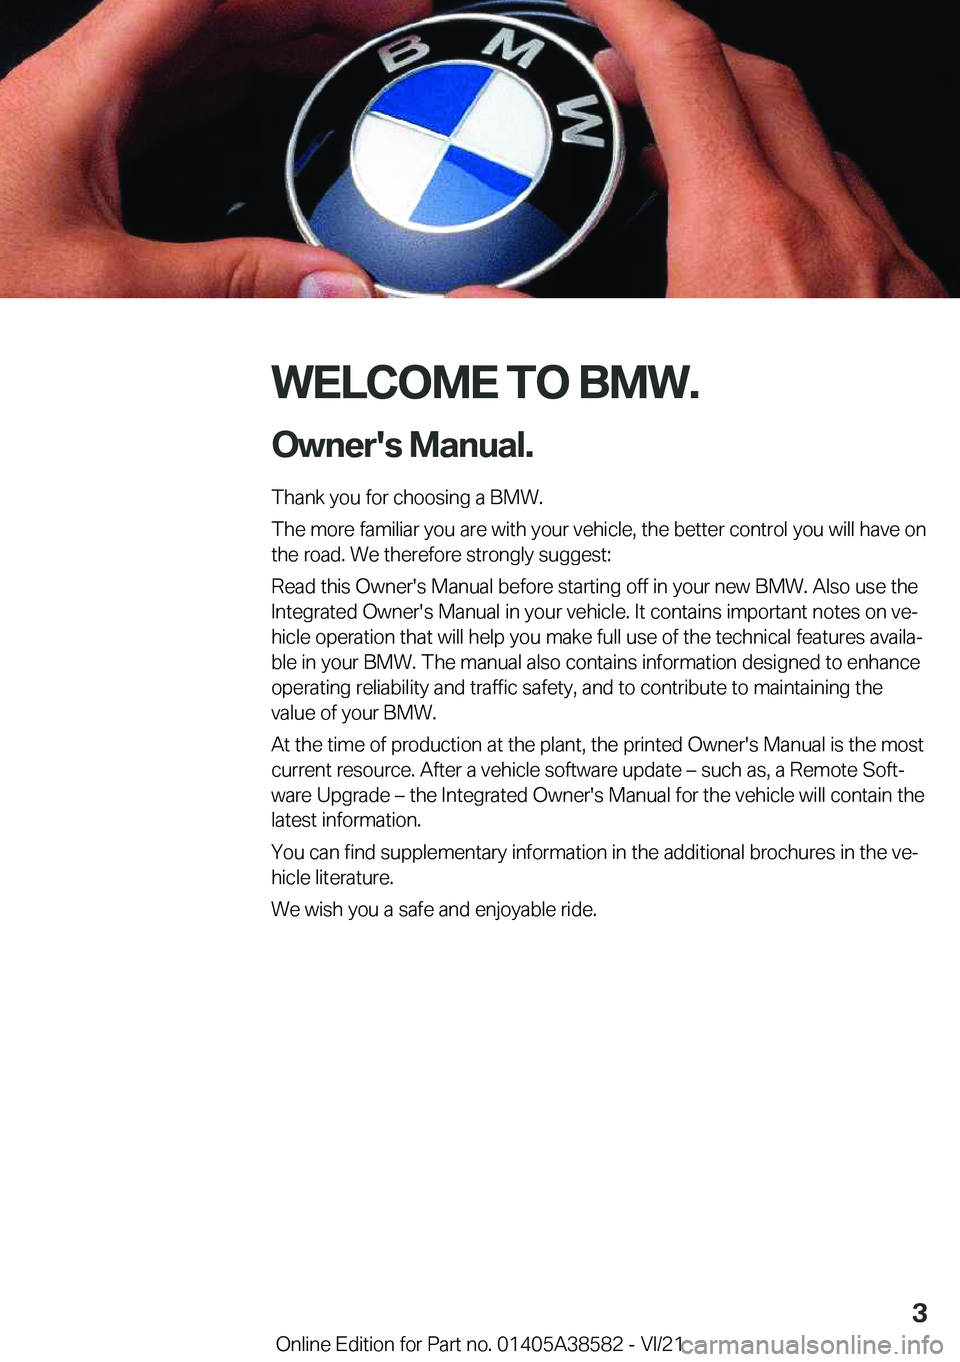 BMW X6 2022  Owners Manual �W�E�L�C�O�M�E��T�O��B�M�W�.�O�w�n�e�r�'�s��M�a�n�u�a�l�.
�T�h�a�n�k��y�o�u��f�o�r��c�h�o�o�s�i�n�g��a��B�M�W�.
�T�h�e��m�o�r�e��f�a�m�i�l�i�a�r��y�o�u��a�r�e��w�i�t�h��y�o�u�r��v�e